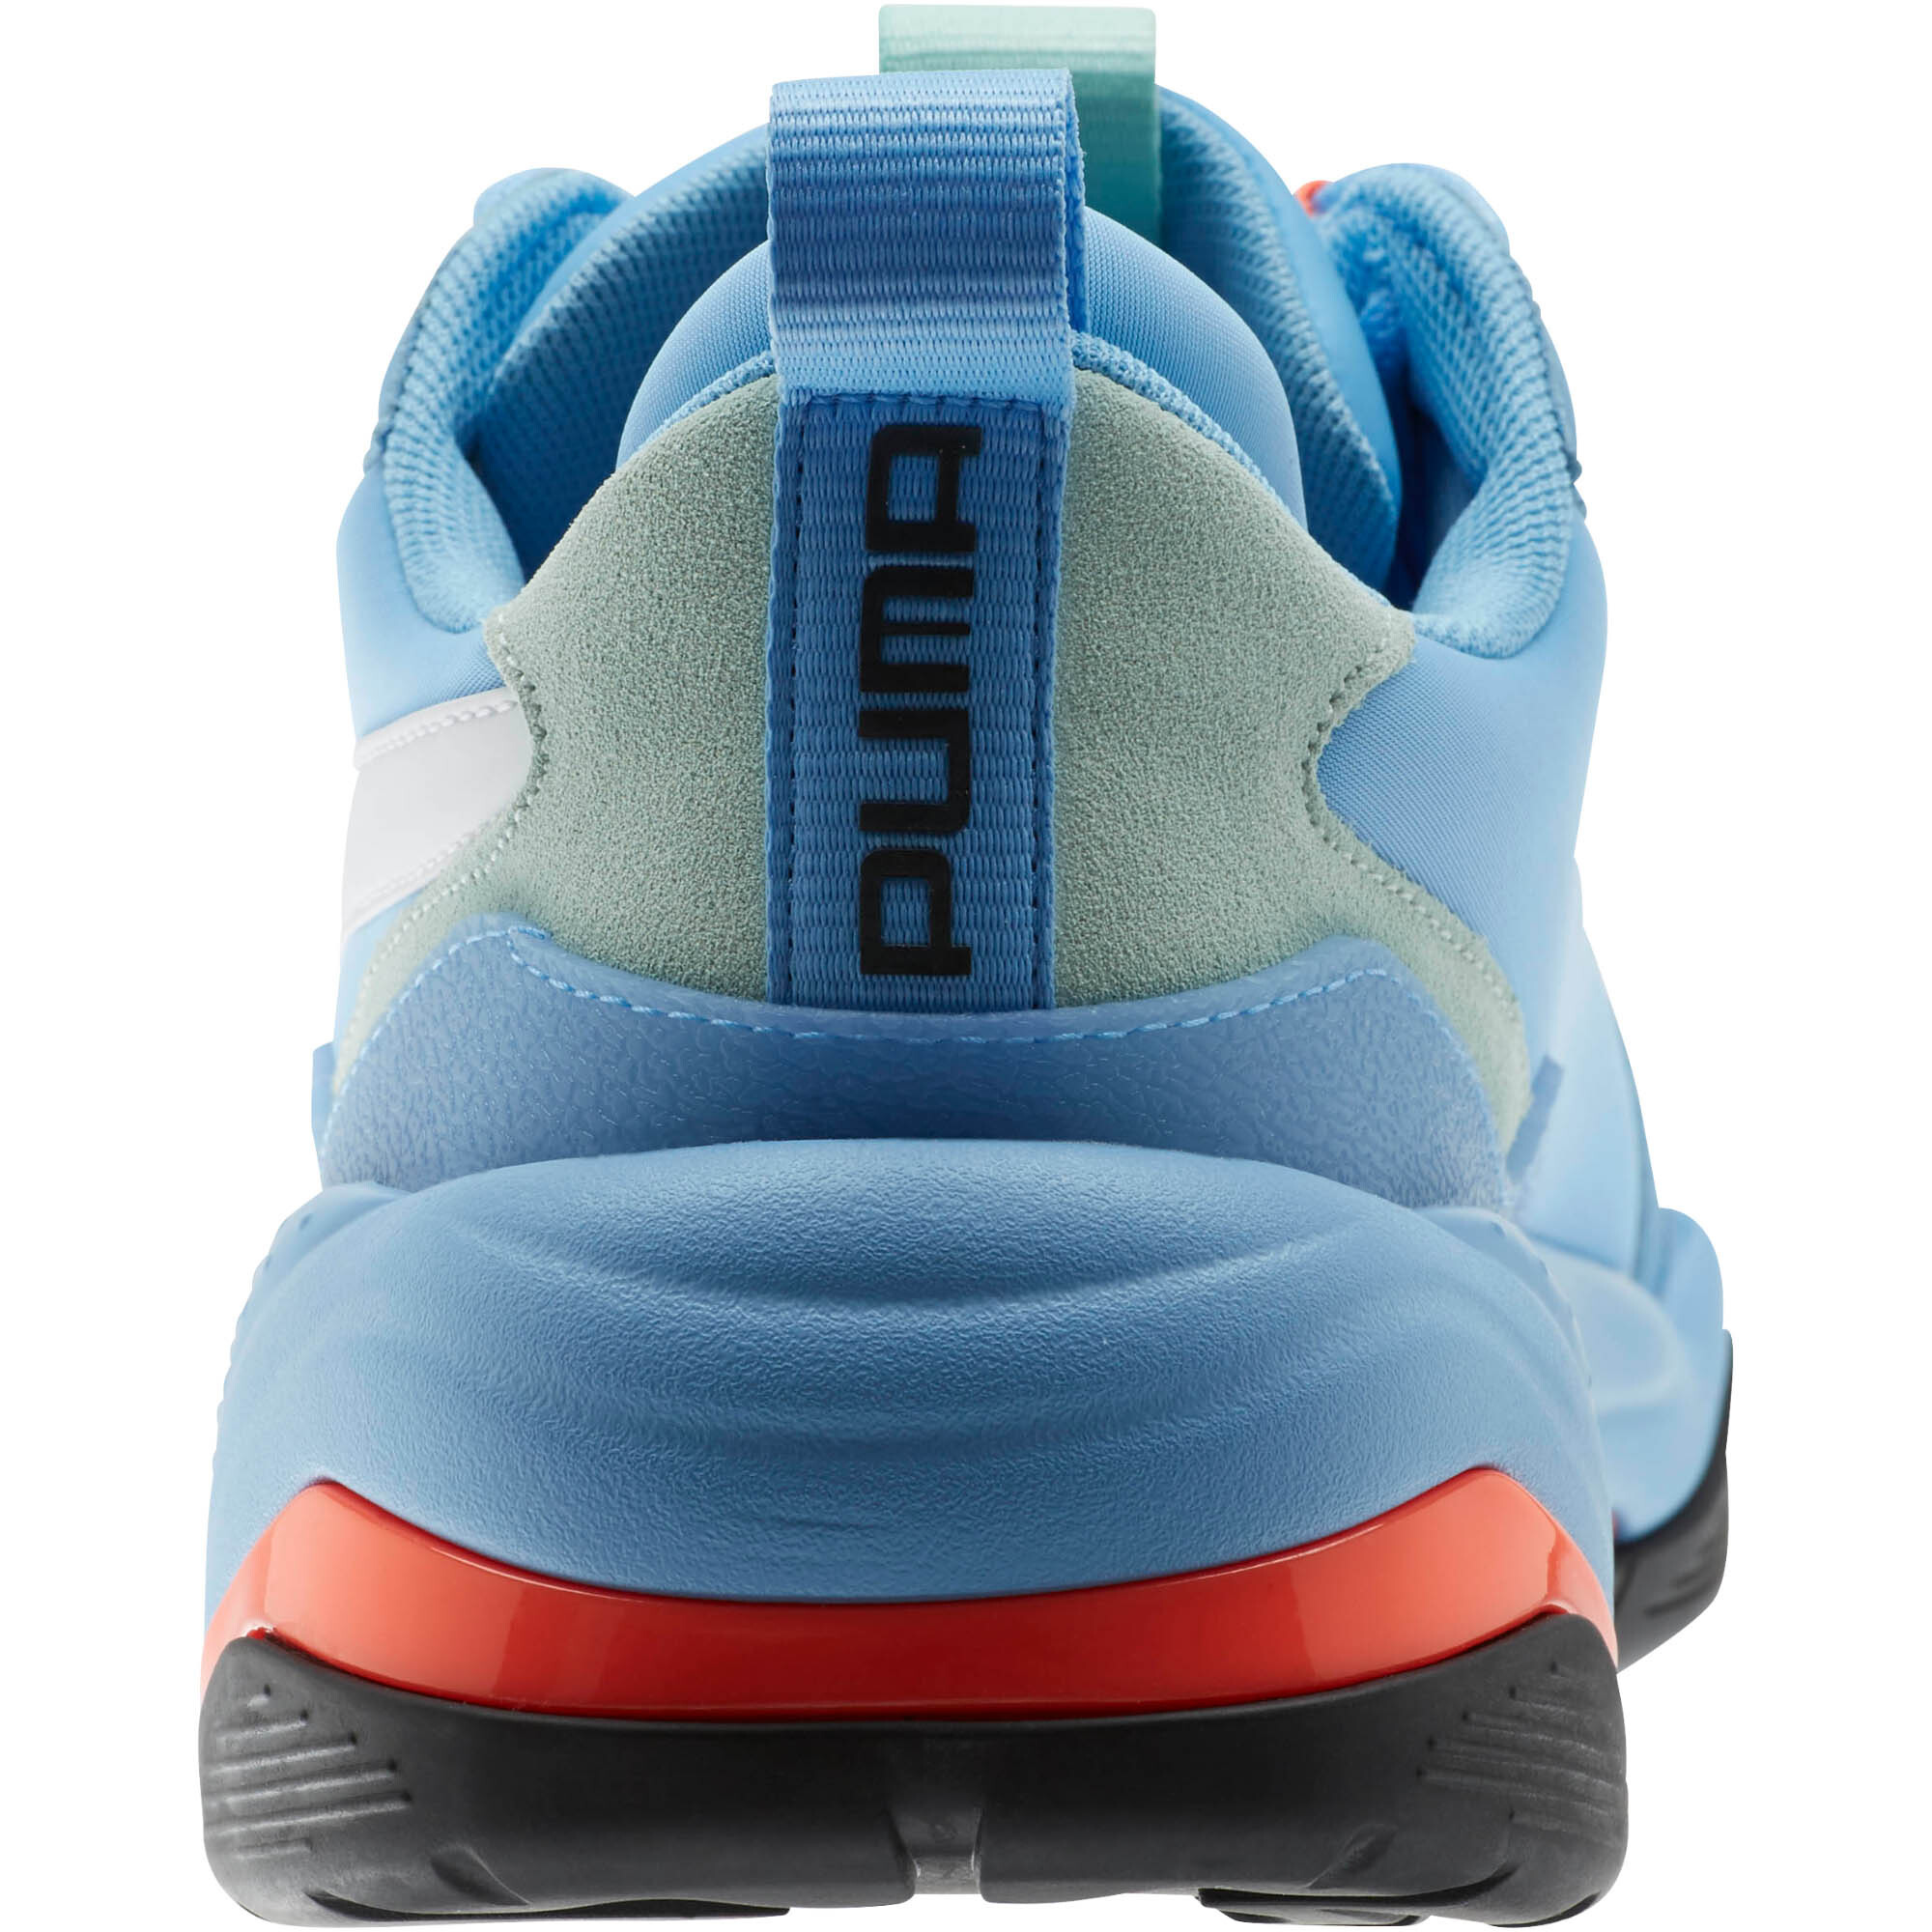 PUMA Thunder Spectra Sneakers Men Shoe | eBay